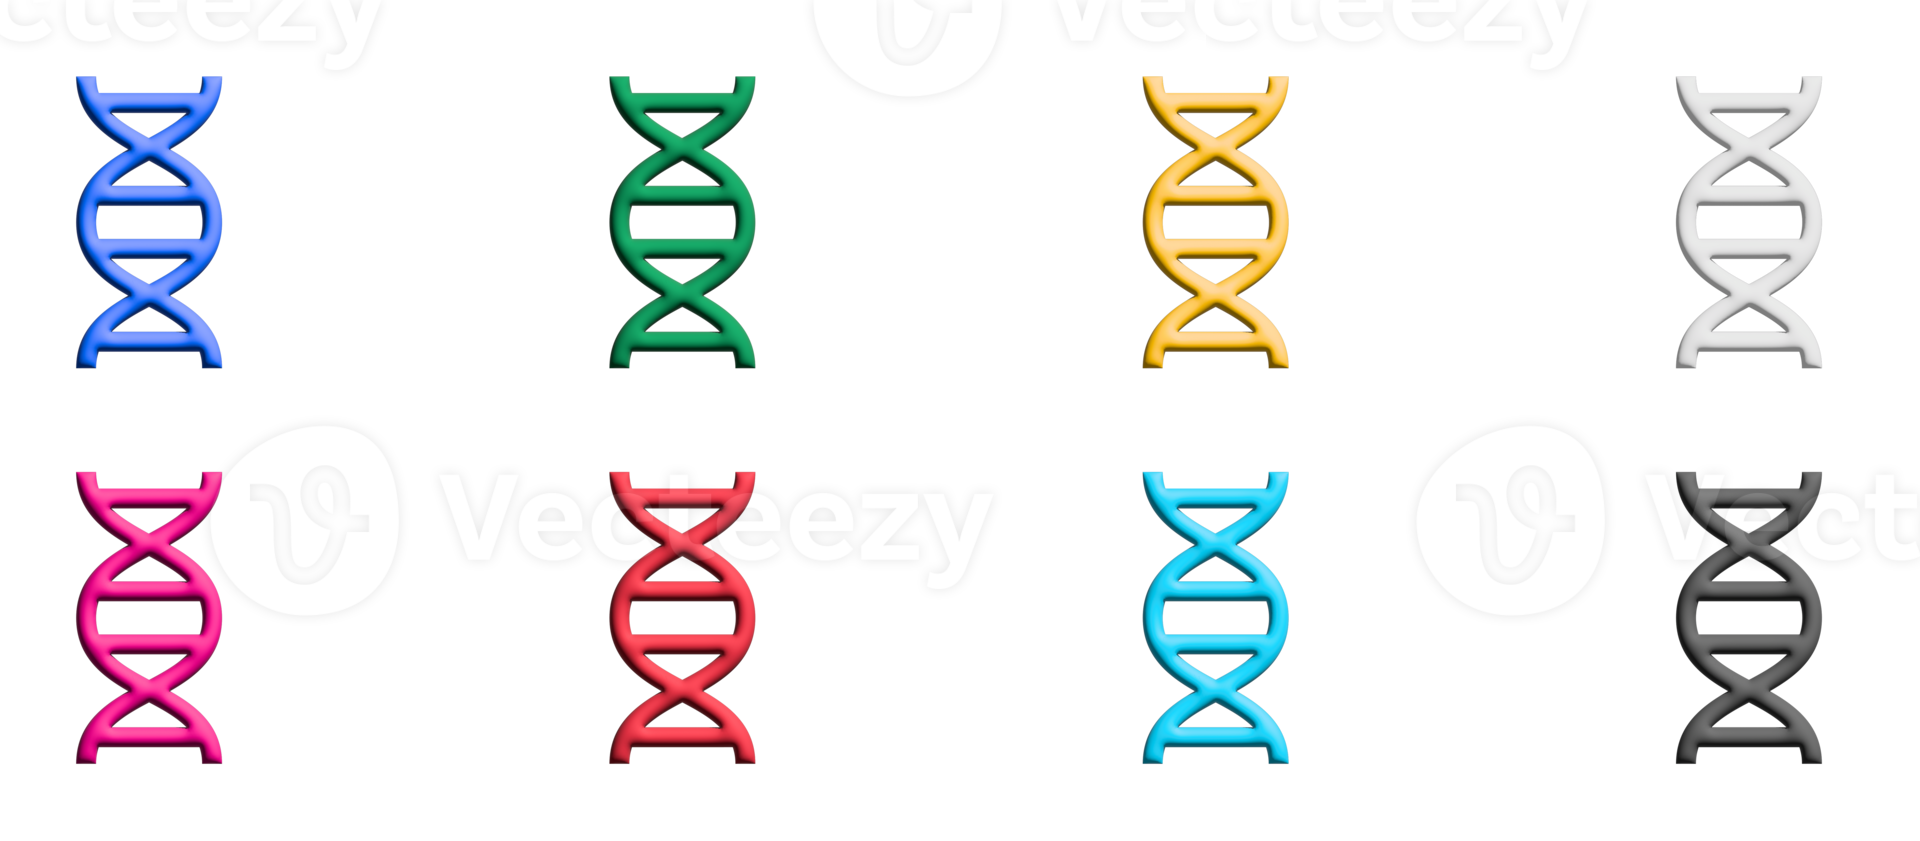 Chromosome icon set, colorful symbols graphic elements png